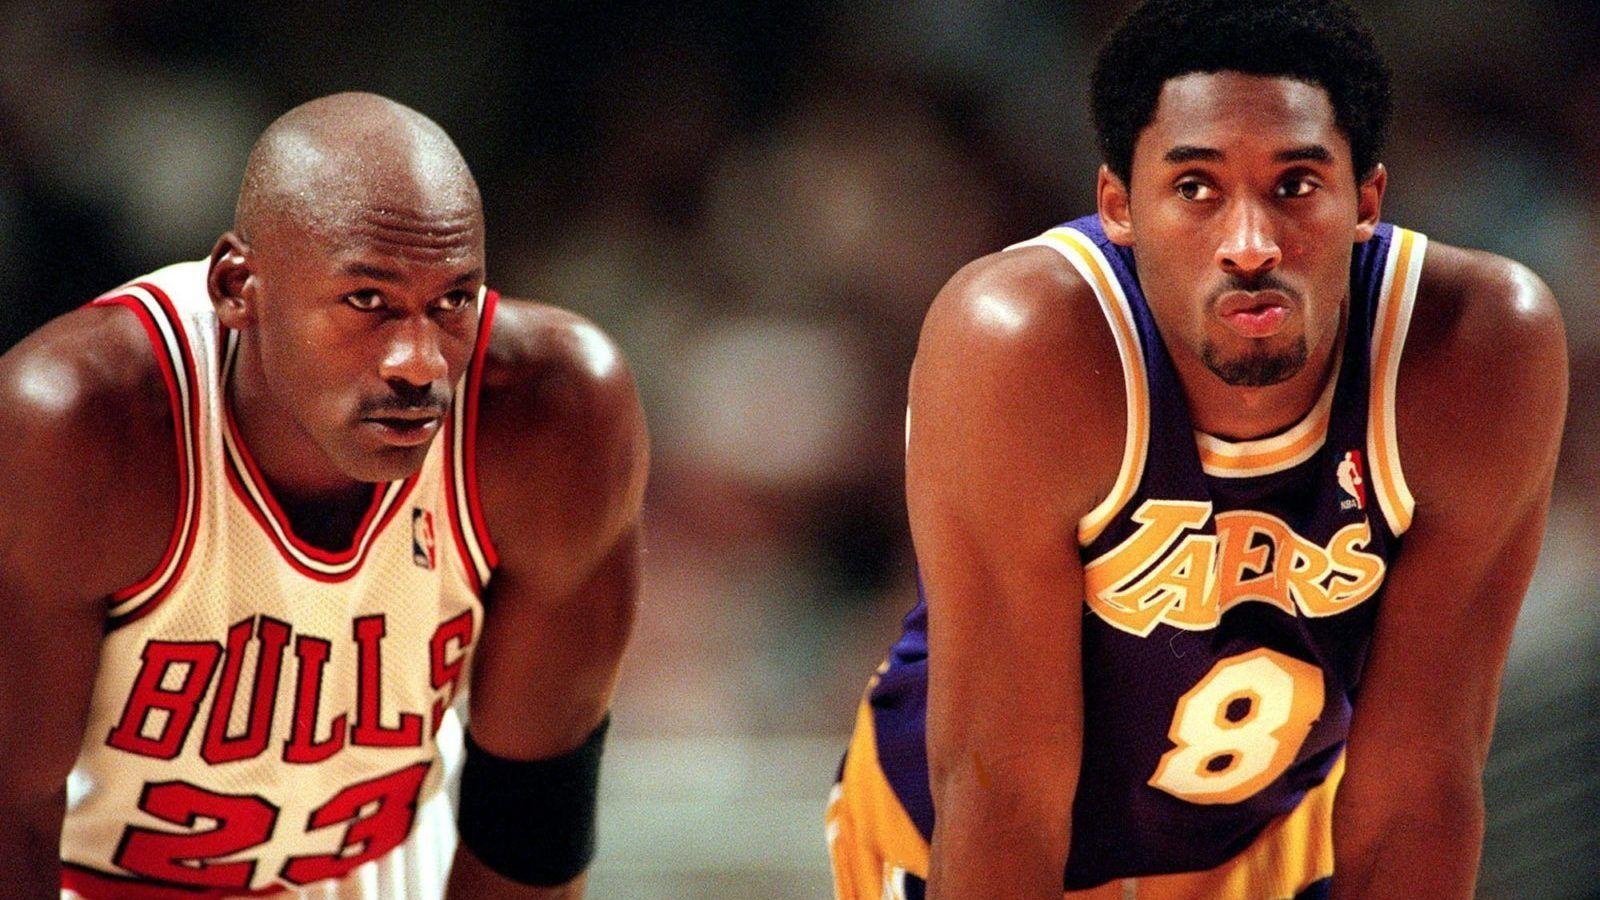 Warriors news: Steve Kerr compares Kobe Bryant to Michael Jordan